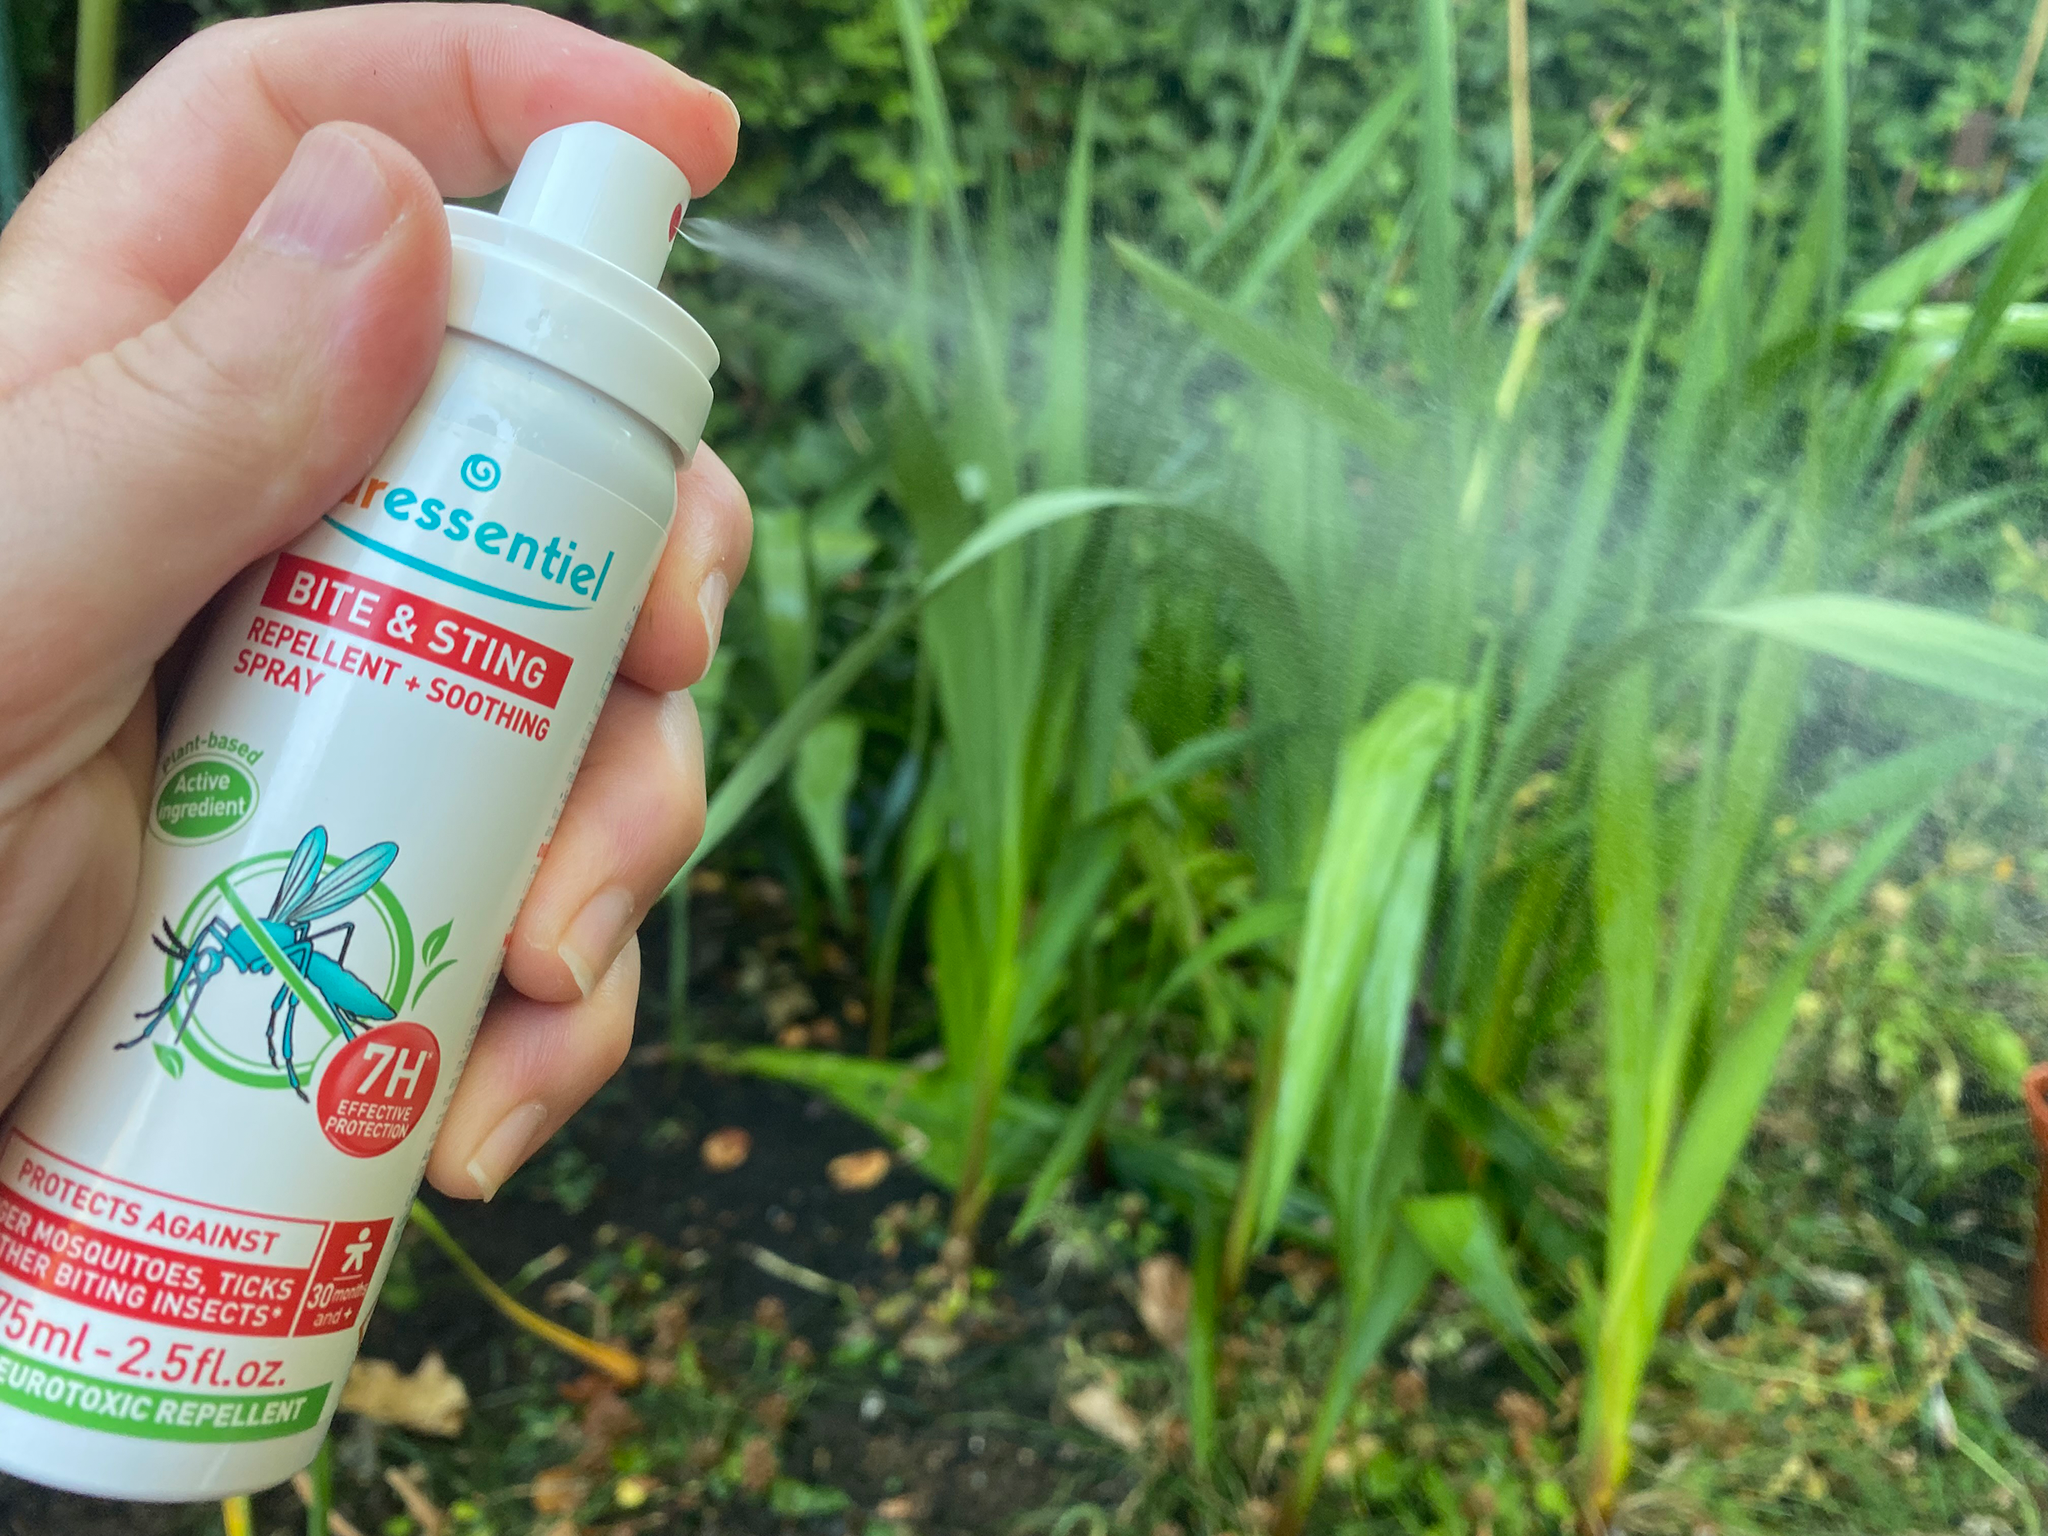 Puressentiel bite & sting spray repellent + soothing